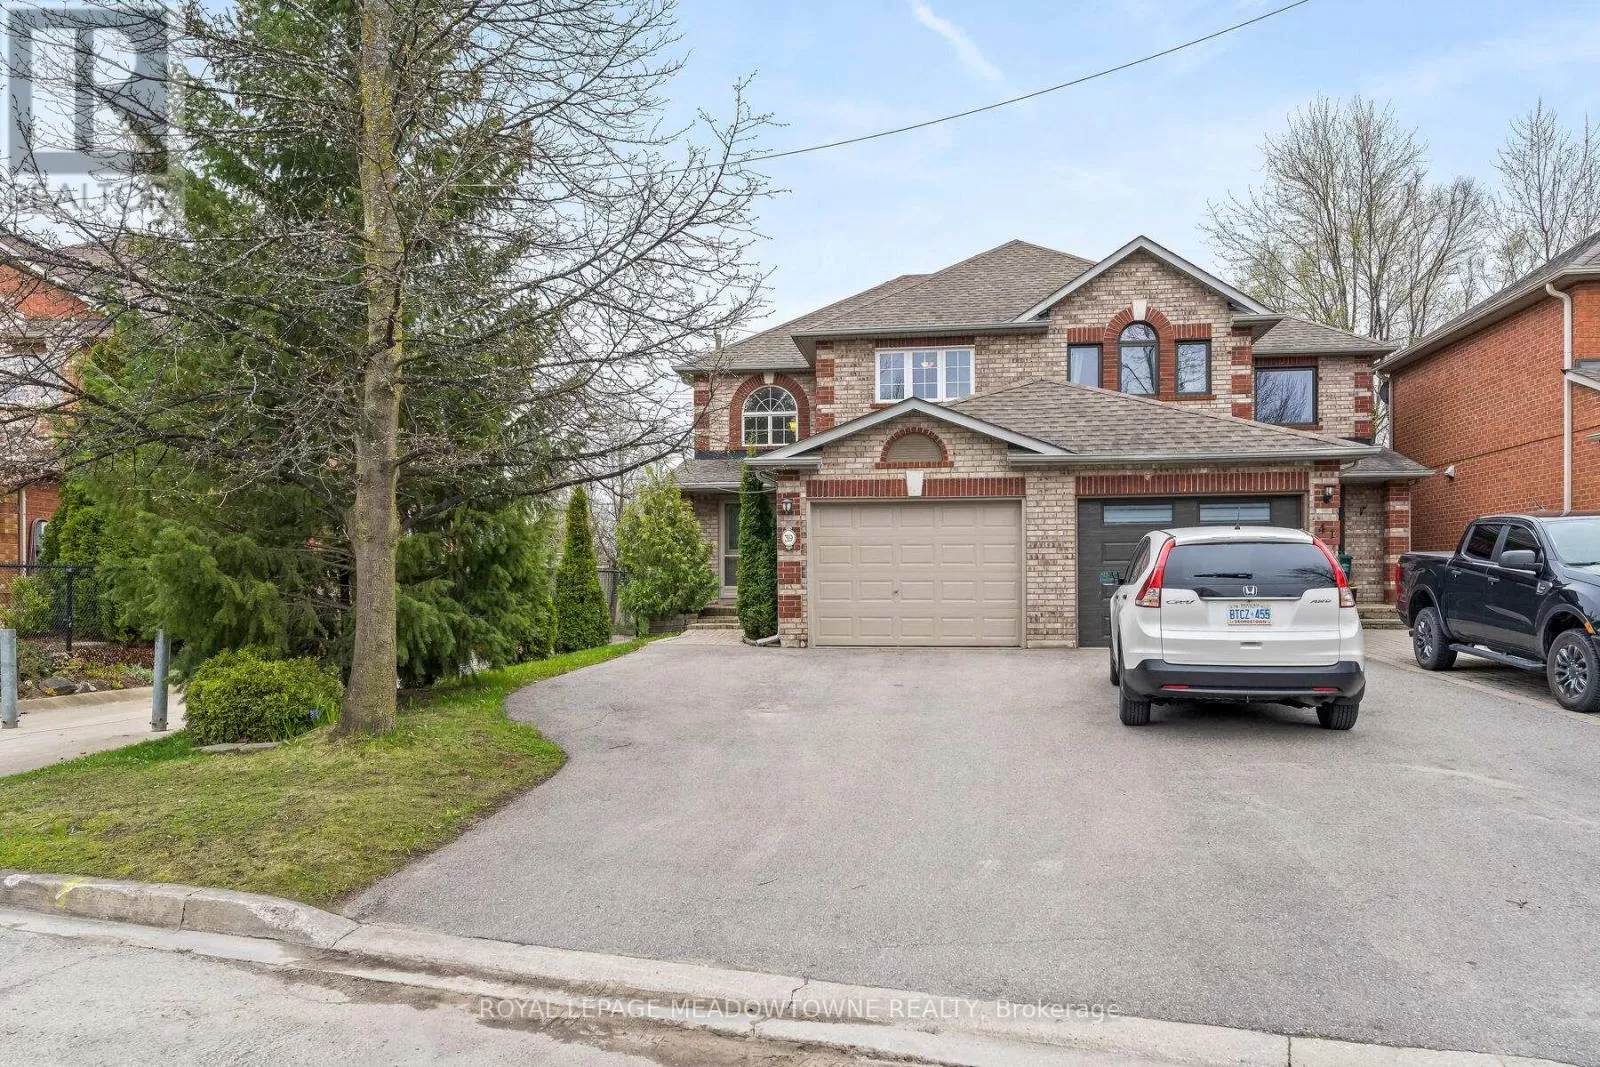 House for rent: 39 Mcclure Court, Halton Hills, Ontario L7G 5X6